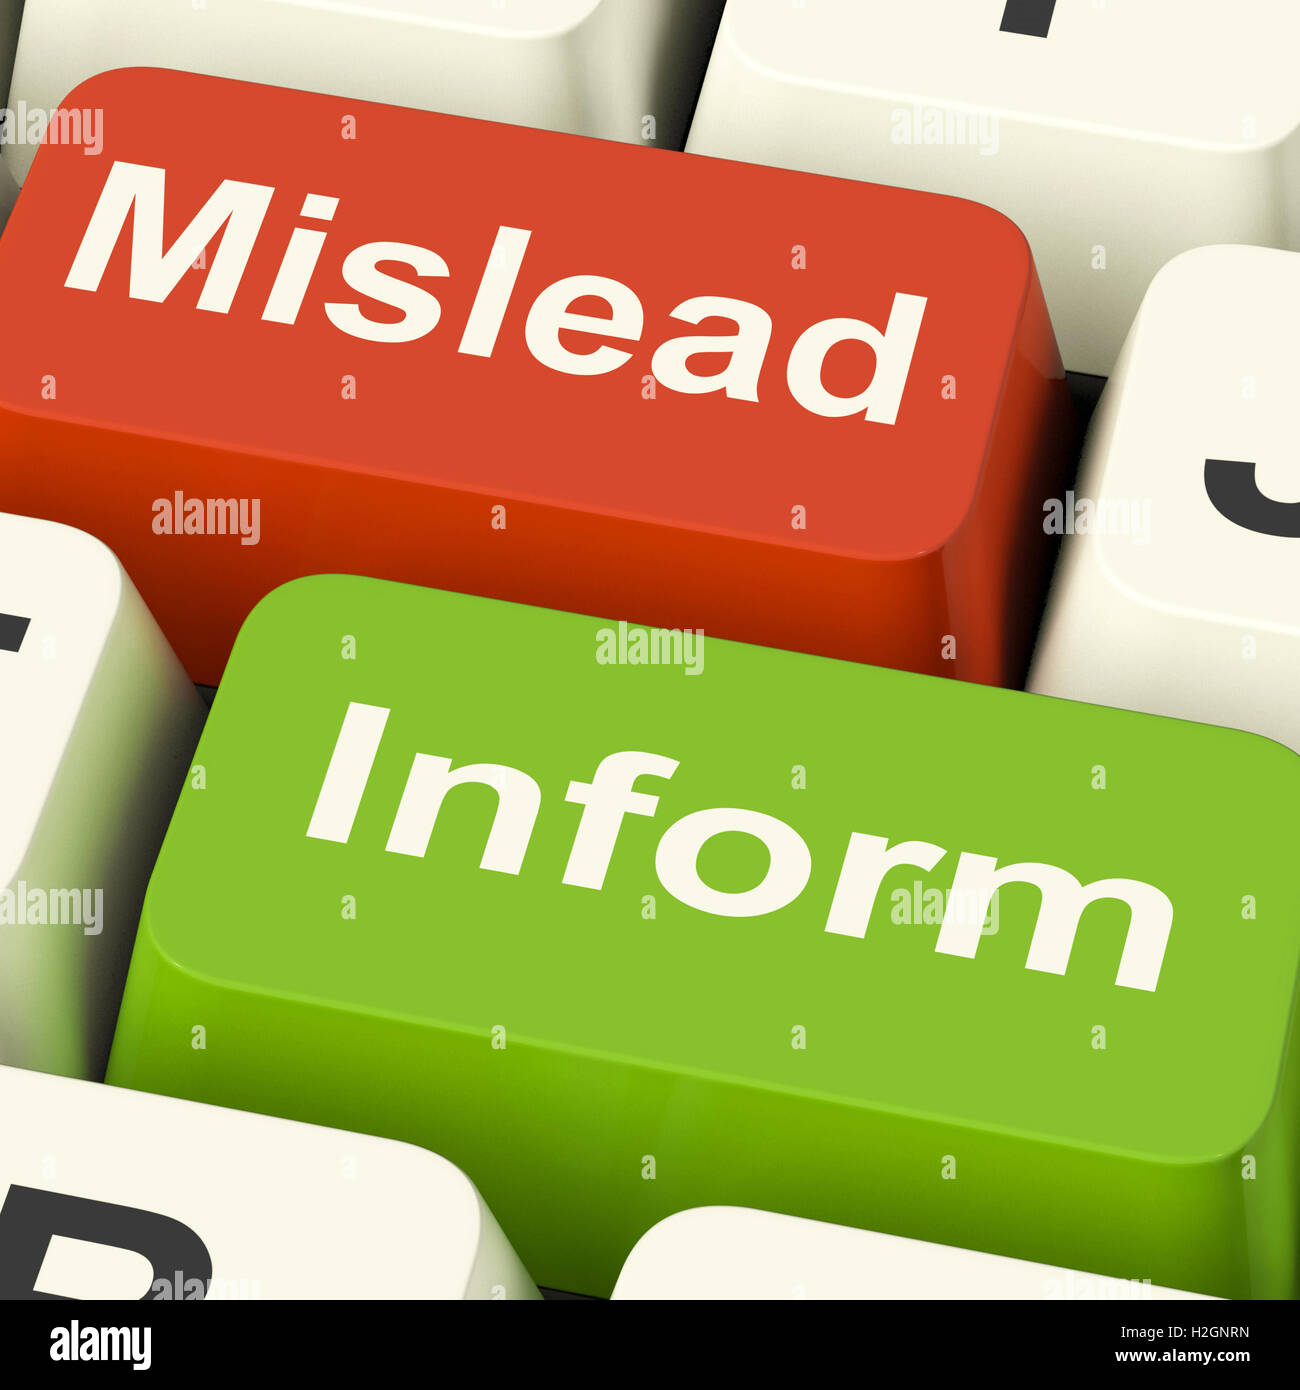 Mislead Inform Keys Shows Misleading Or Informative Advice Stock Photo